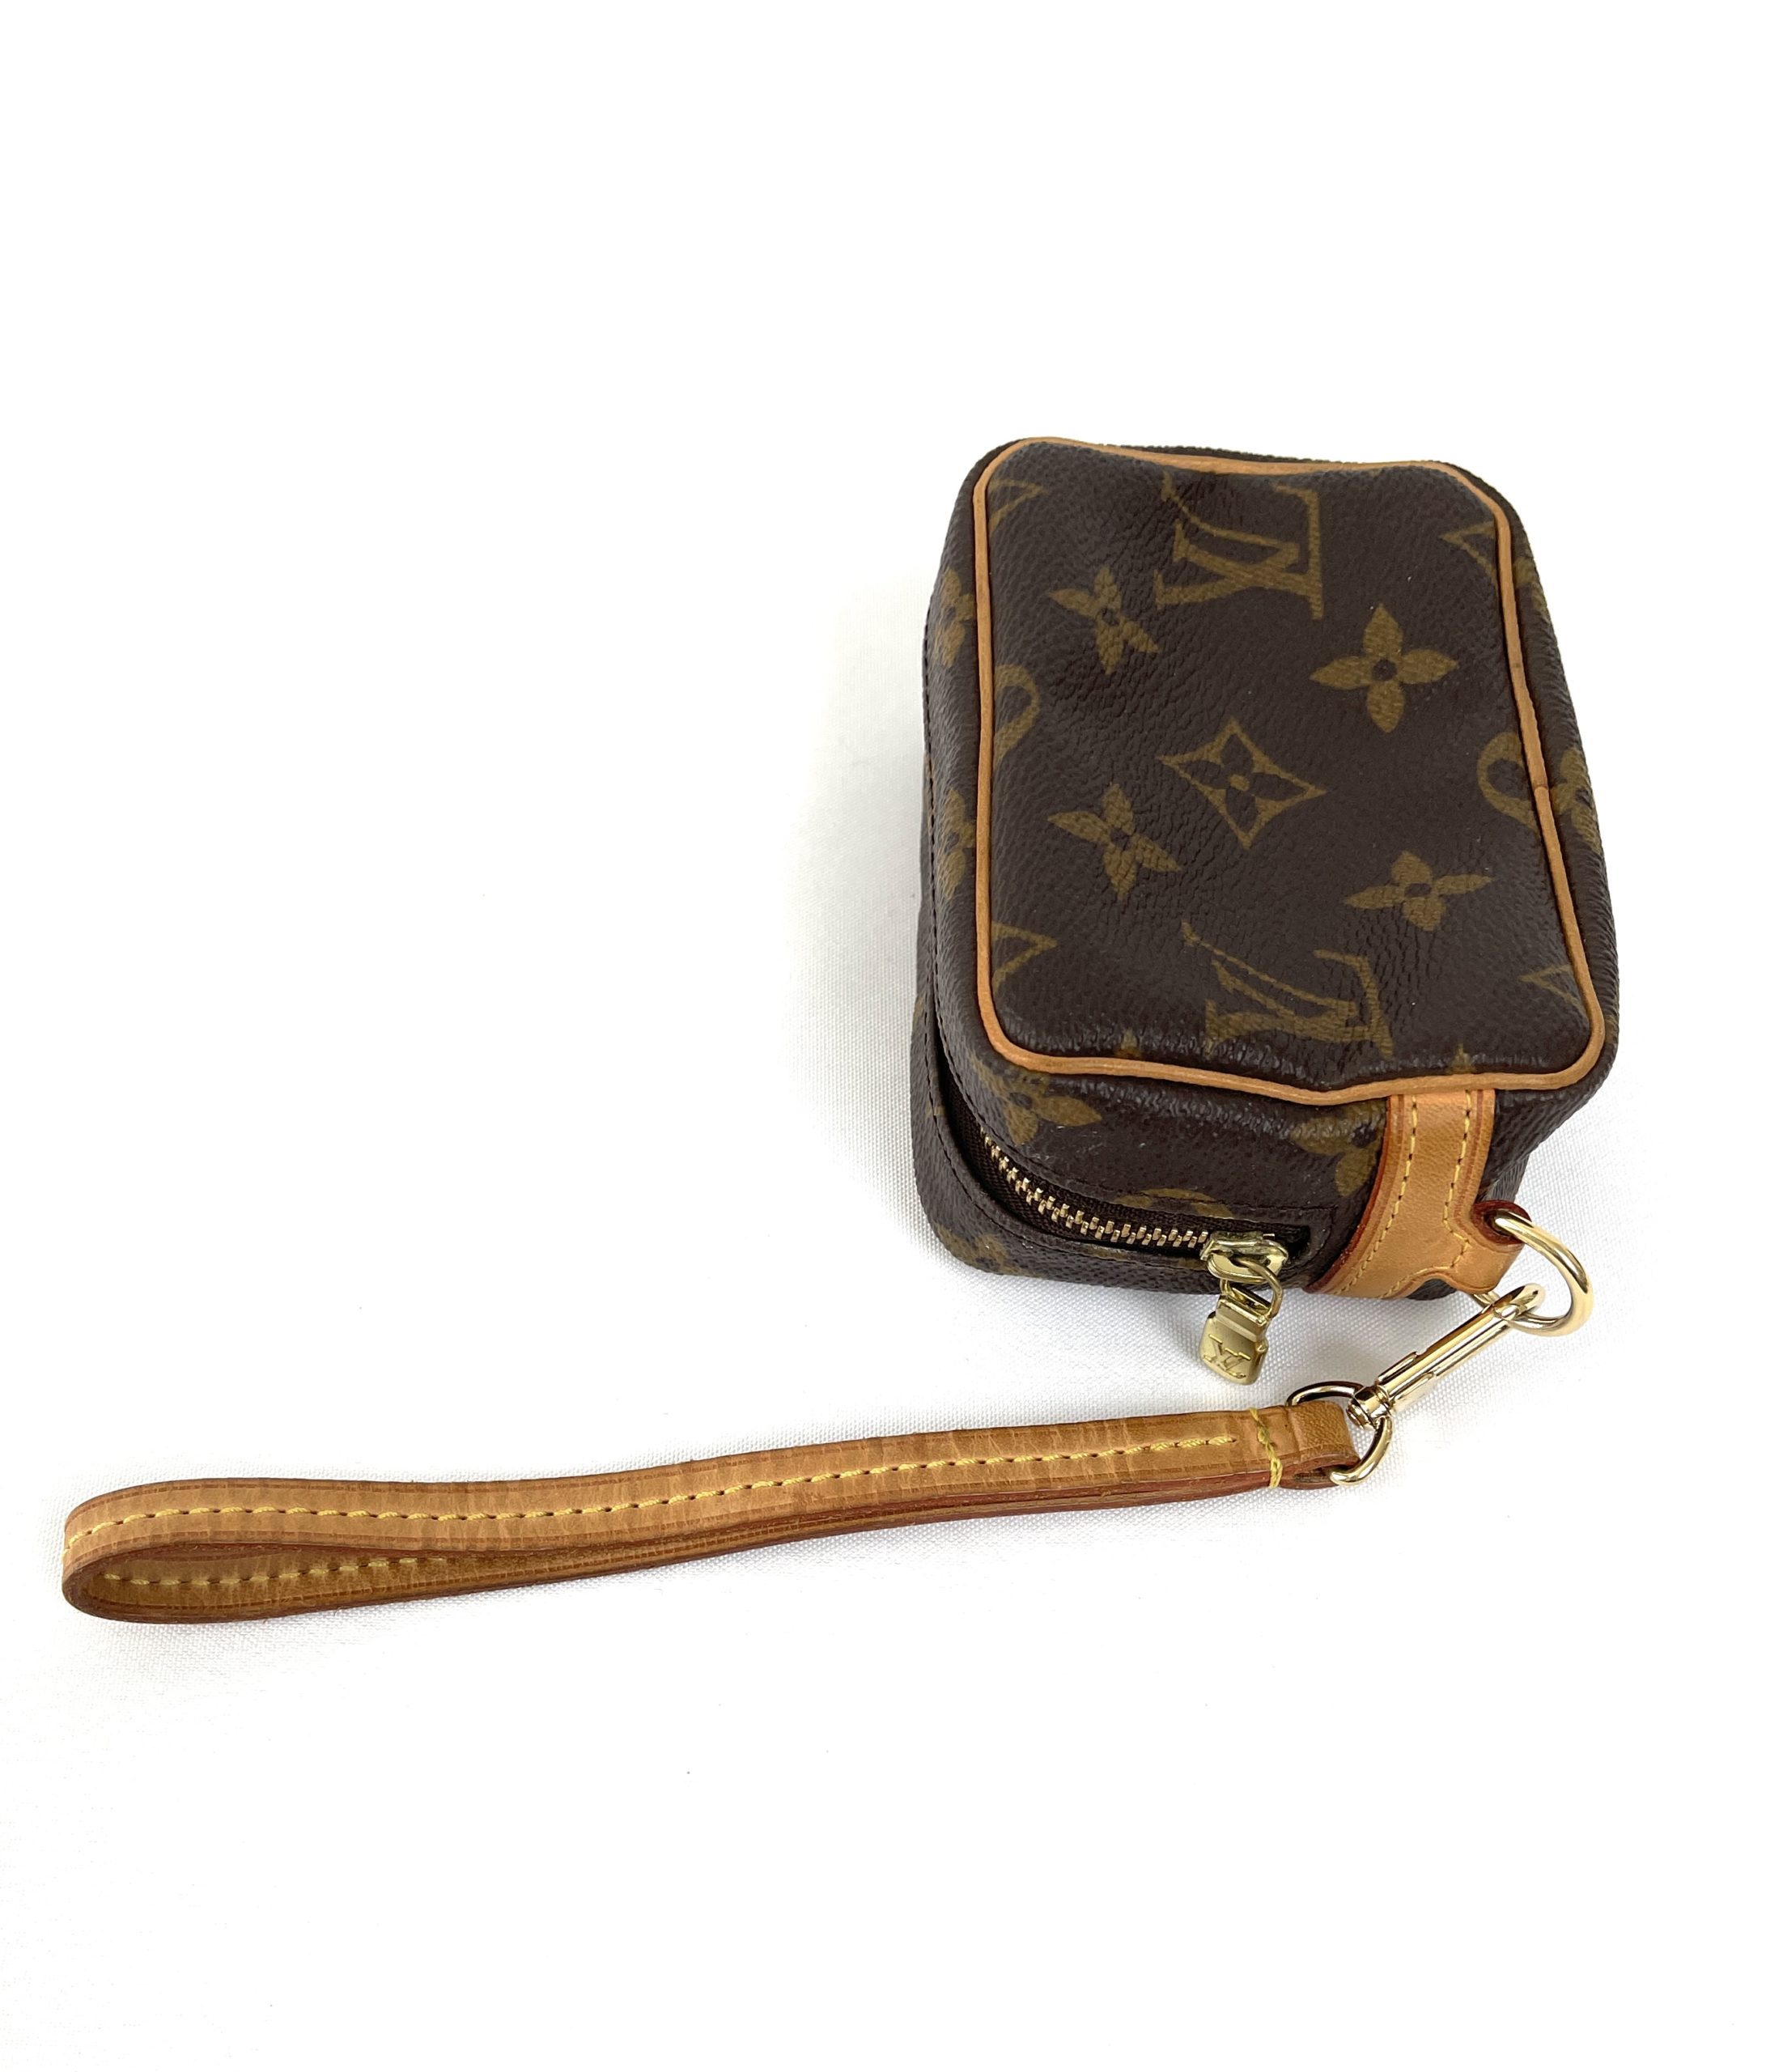 M51790 – dct - Vuitton - Monogram - ep_vintage luxury Store - Bag